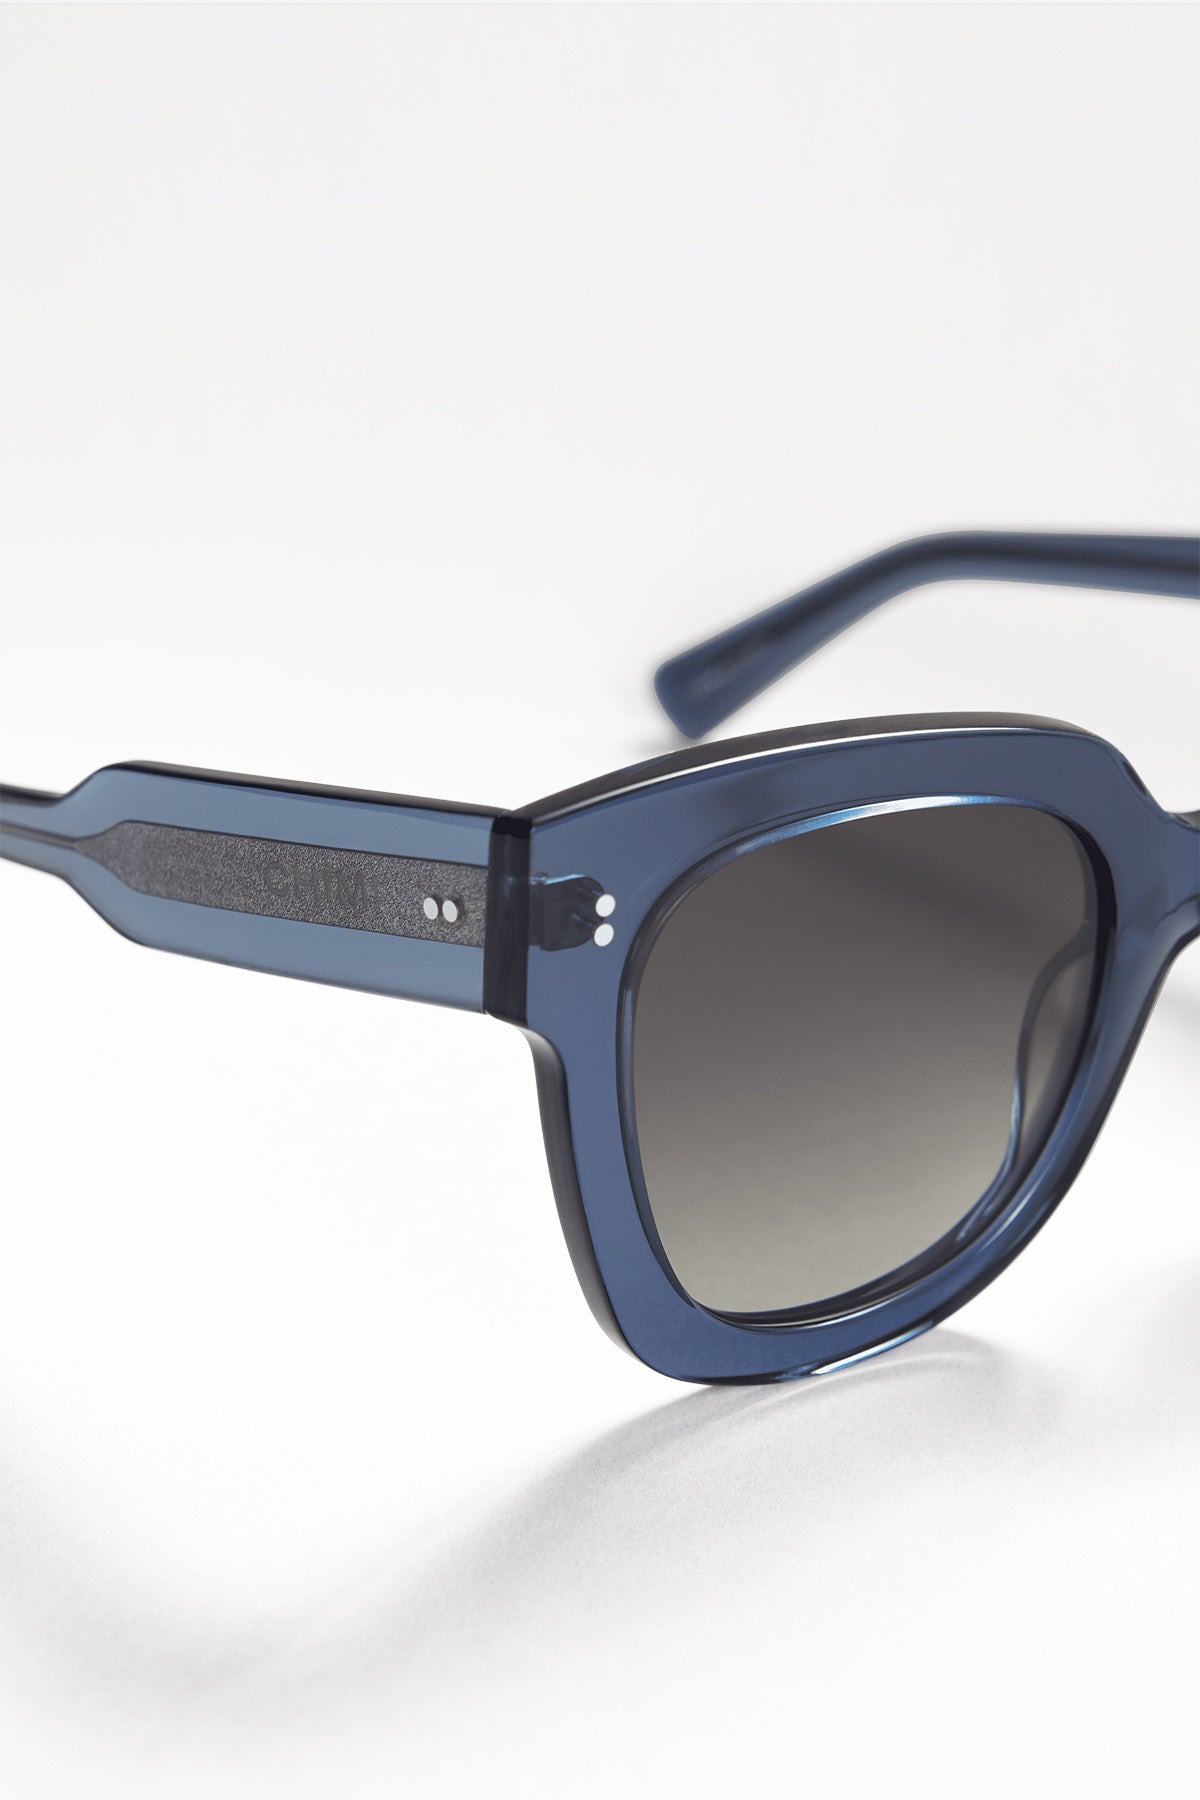   Chimi 08 Sunglasses Blue Detail 